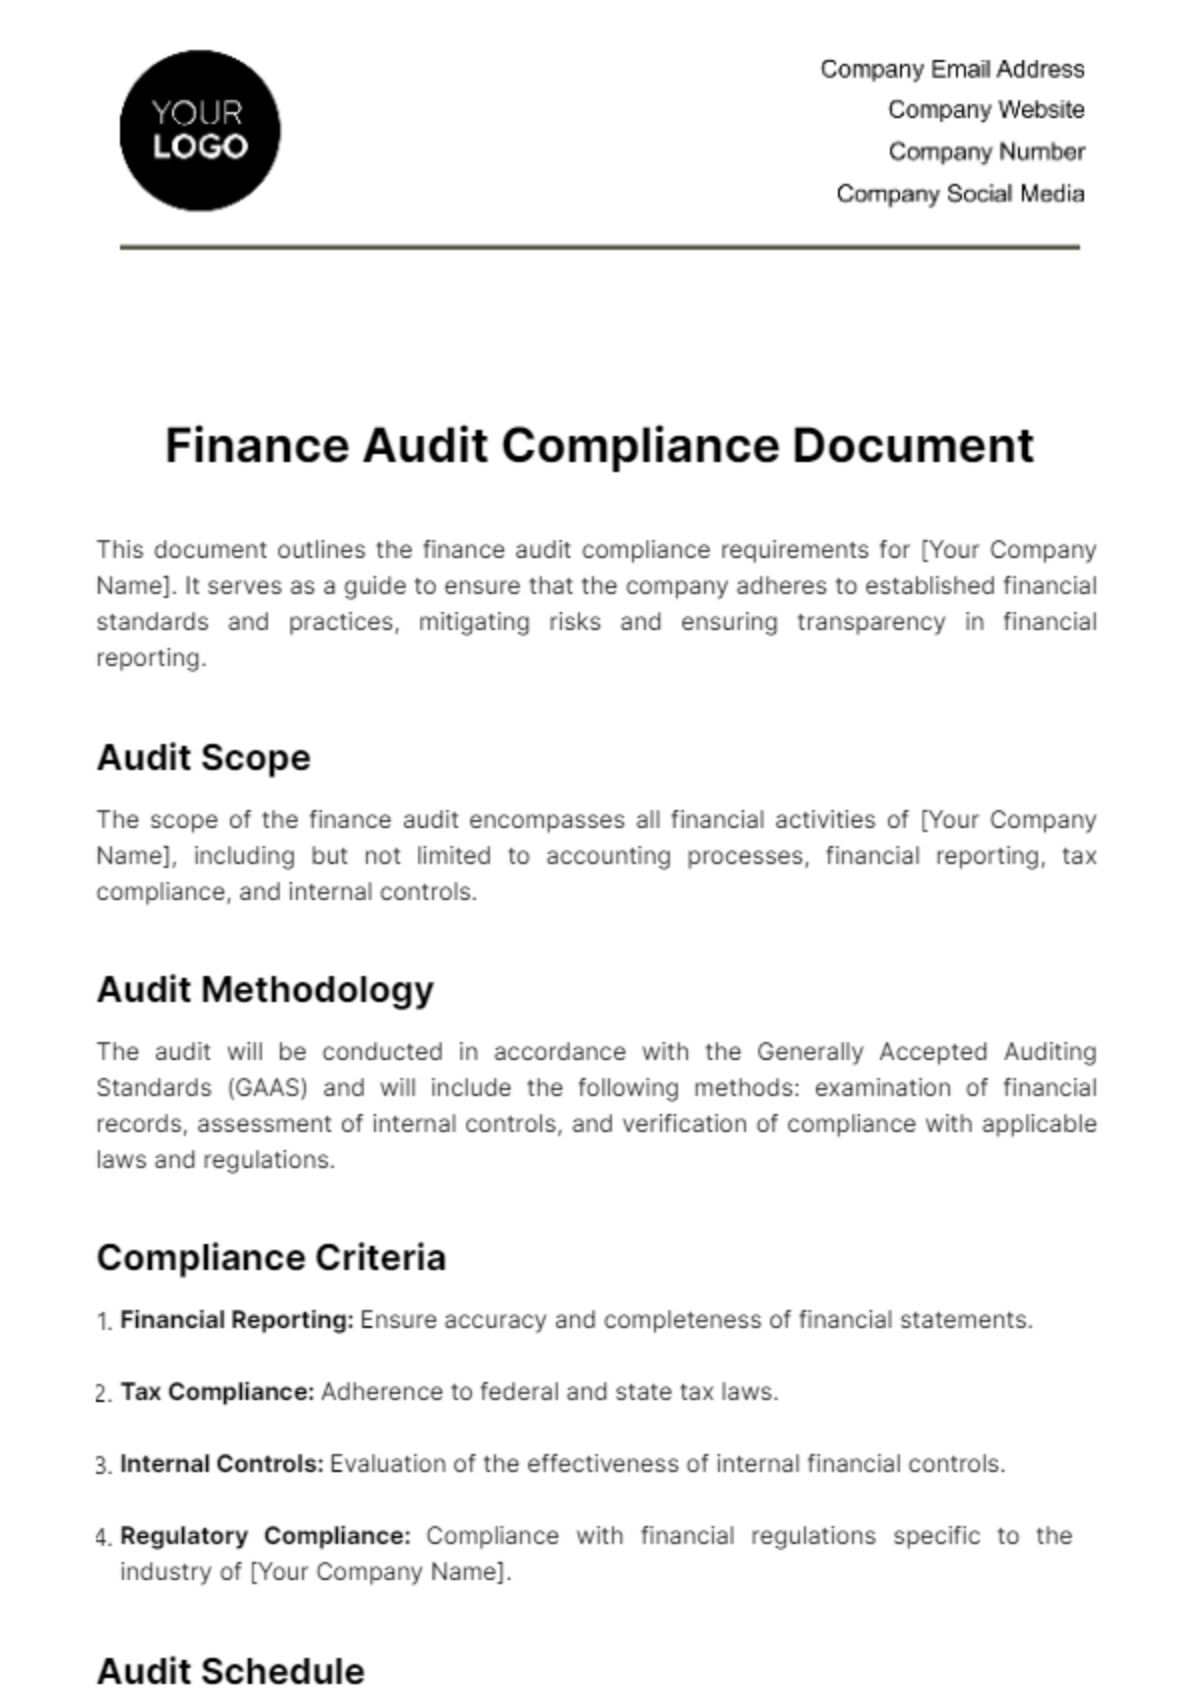 Finance Audit Compliance Document Template